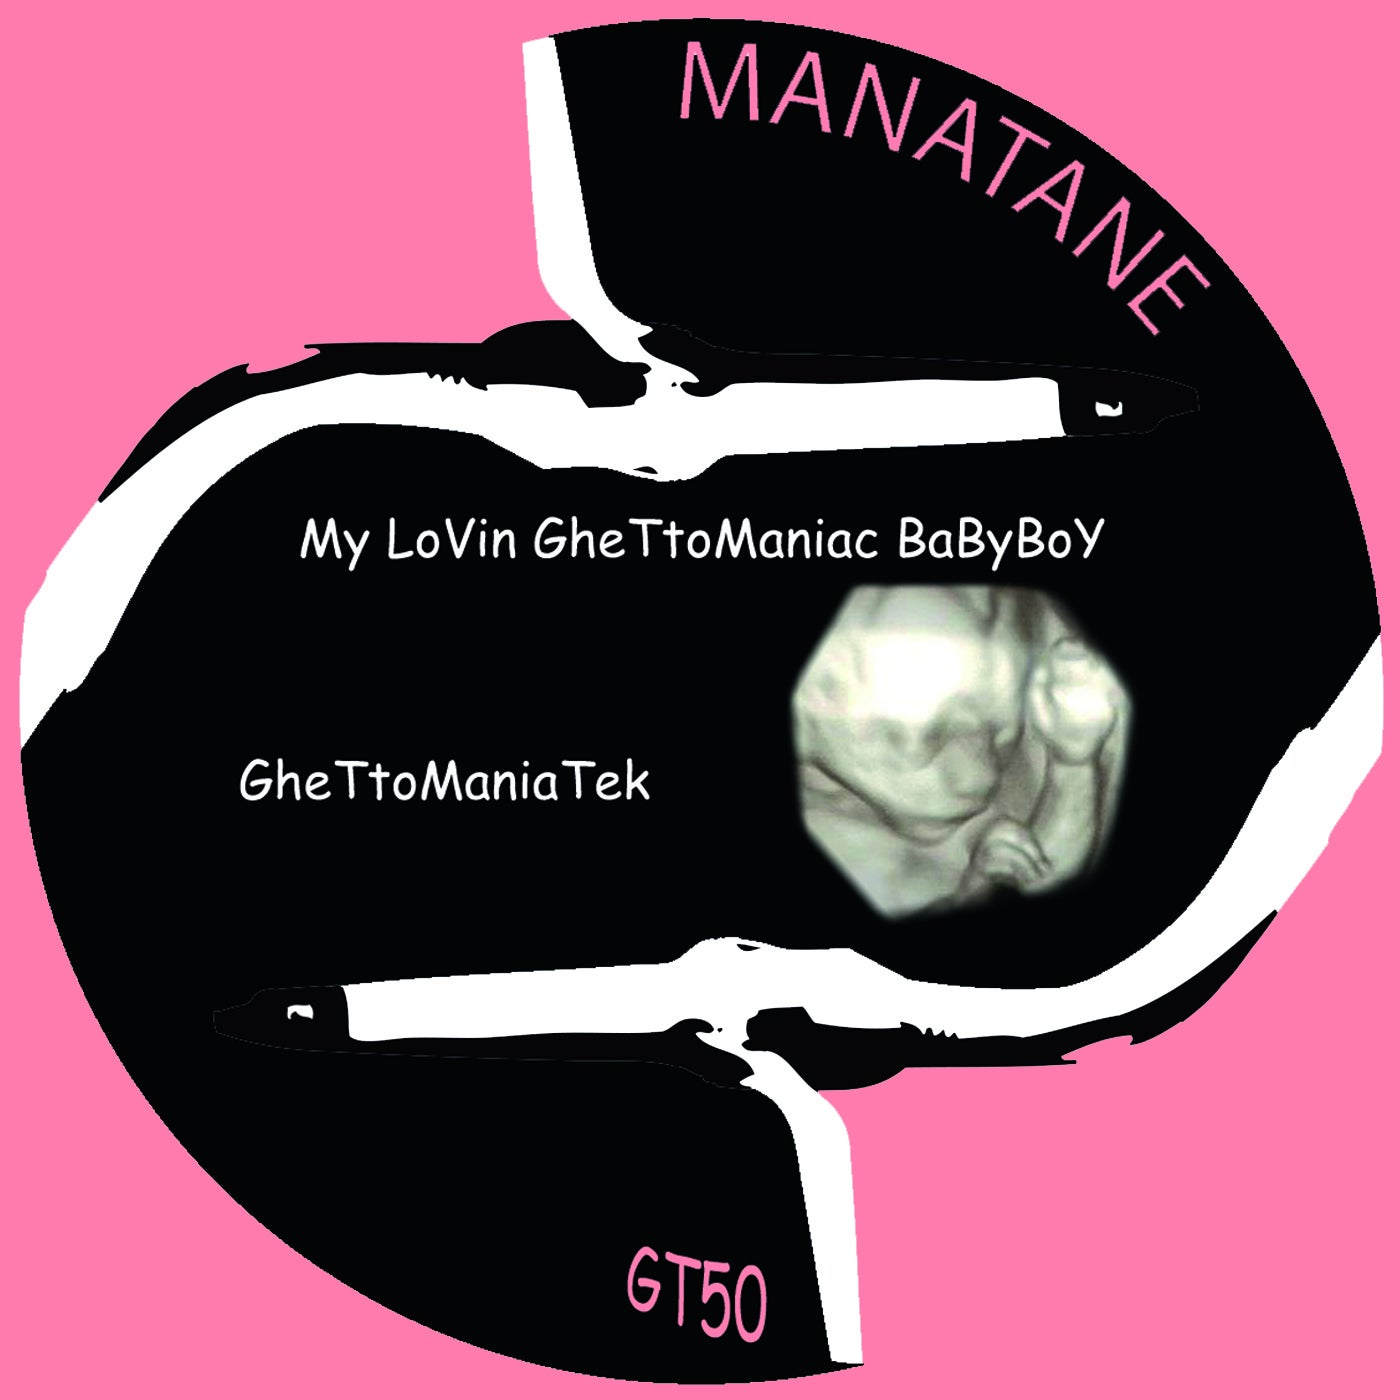 Manatane, Stephan Strube – My Ghettomaniac Lovin Babyboy [GT50]